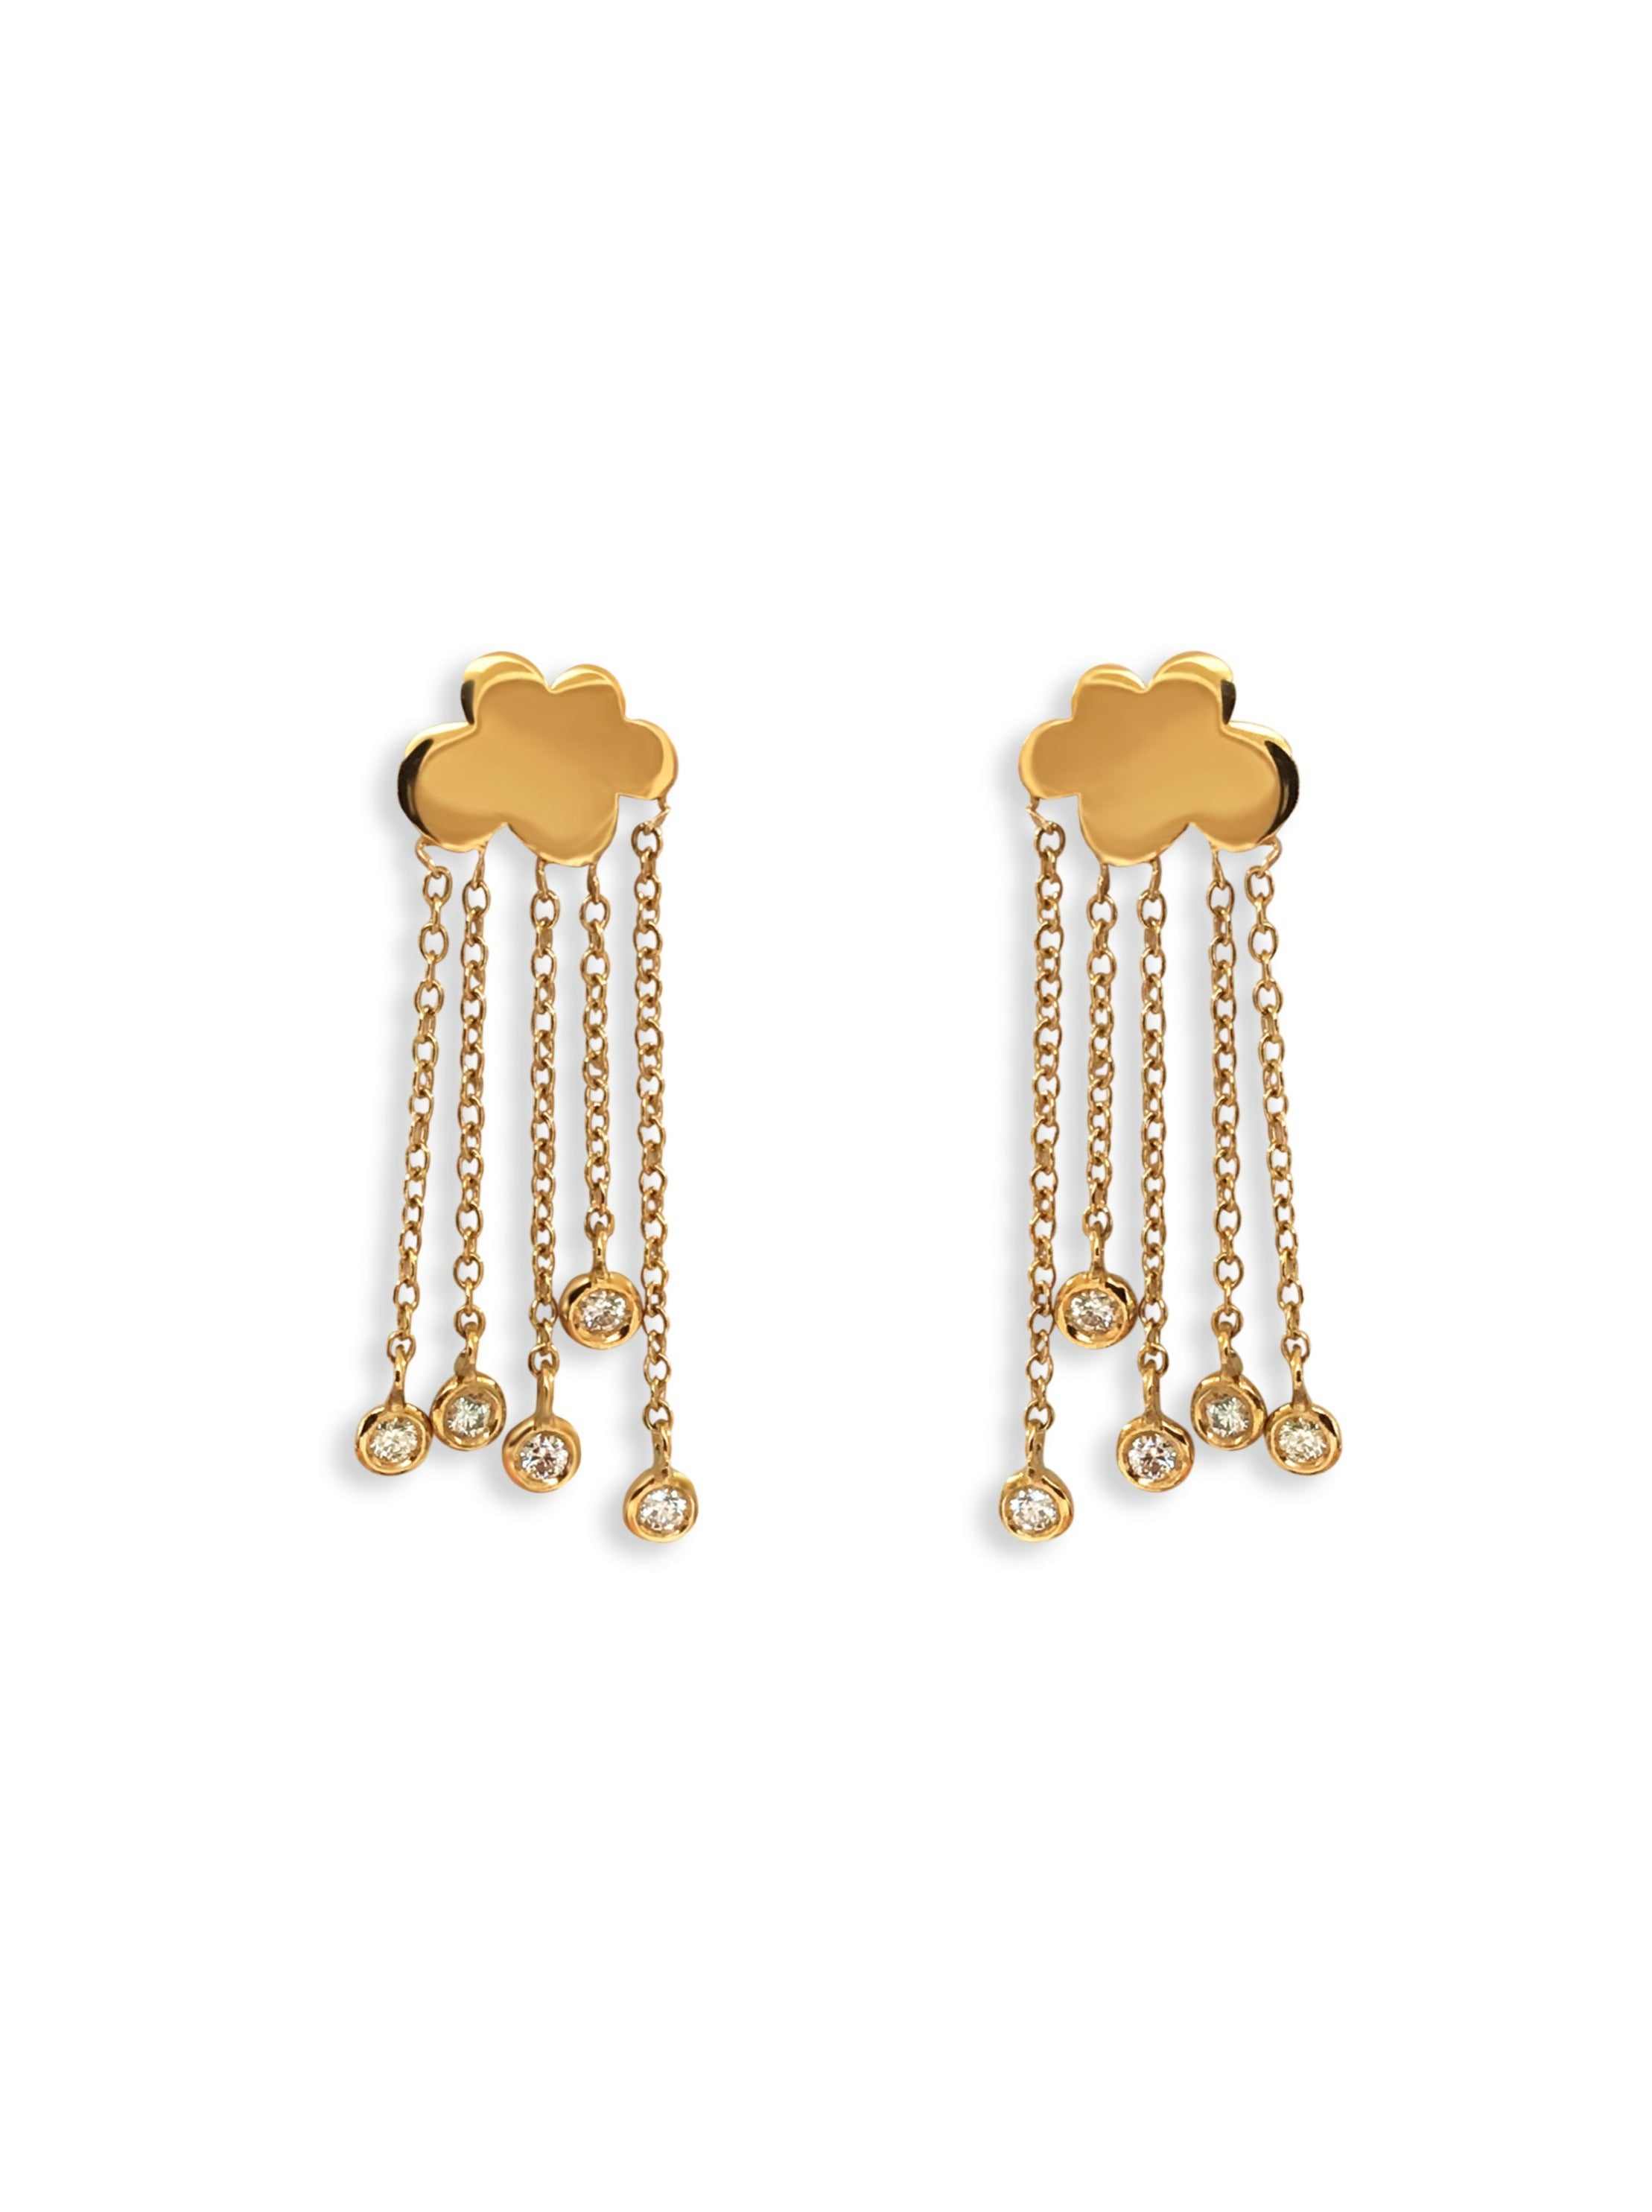 Rain Clouds - Earrings in 18-karat gold with diamonds